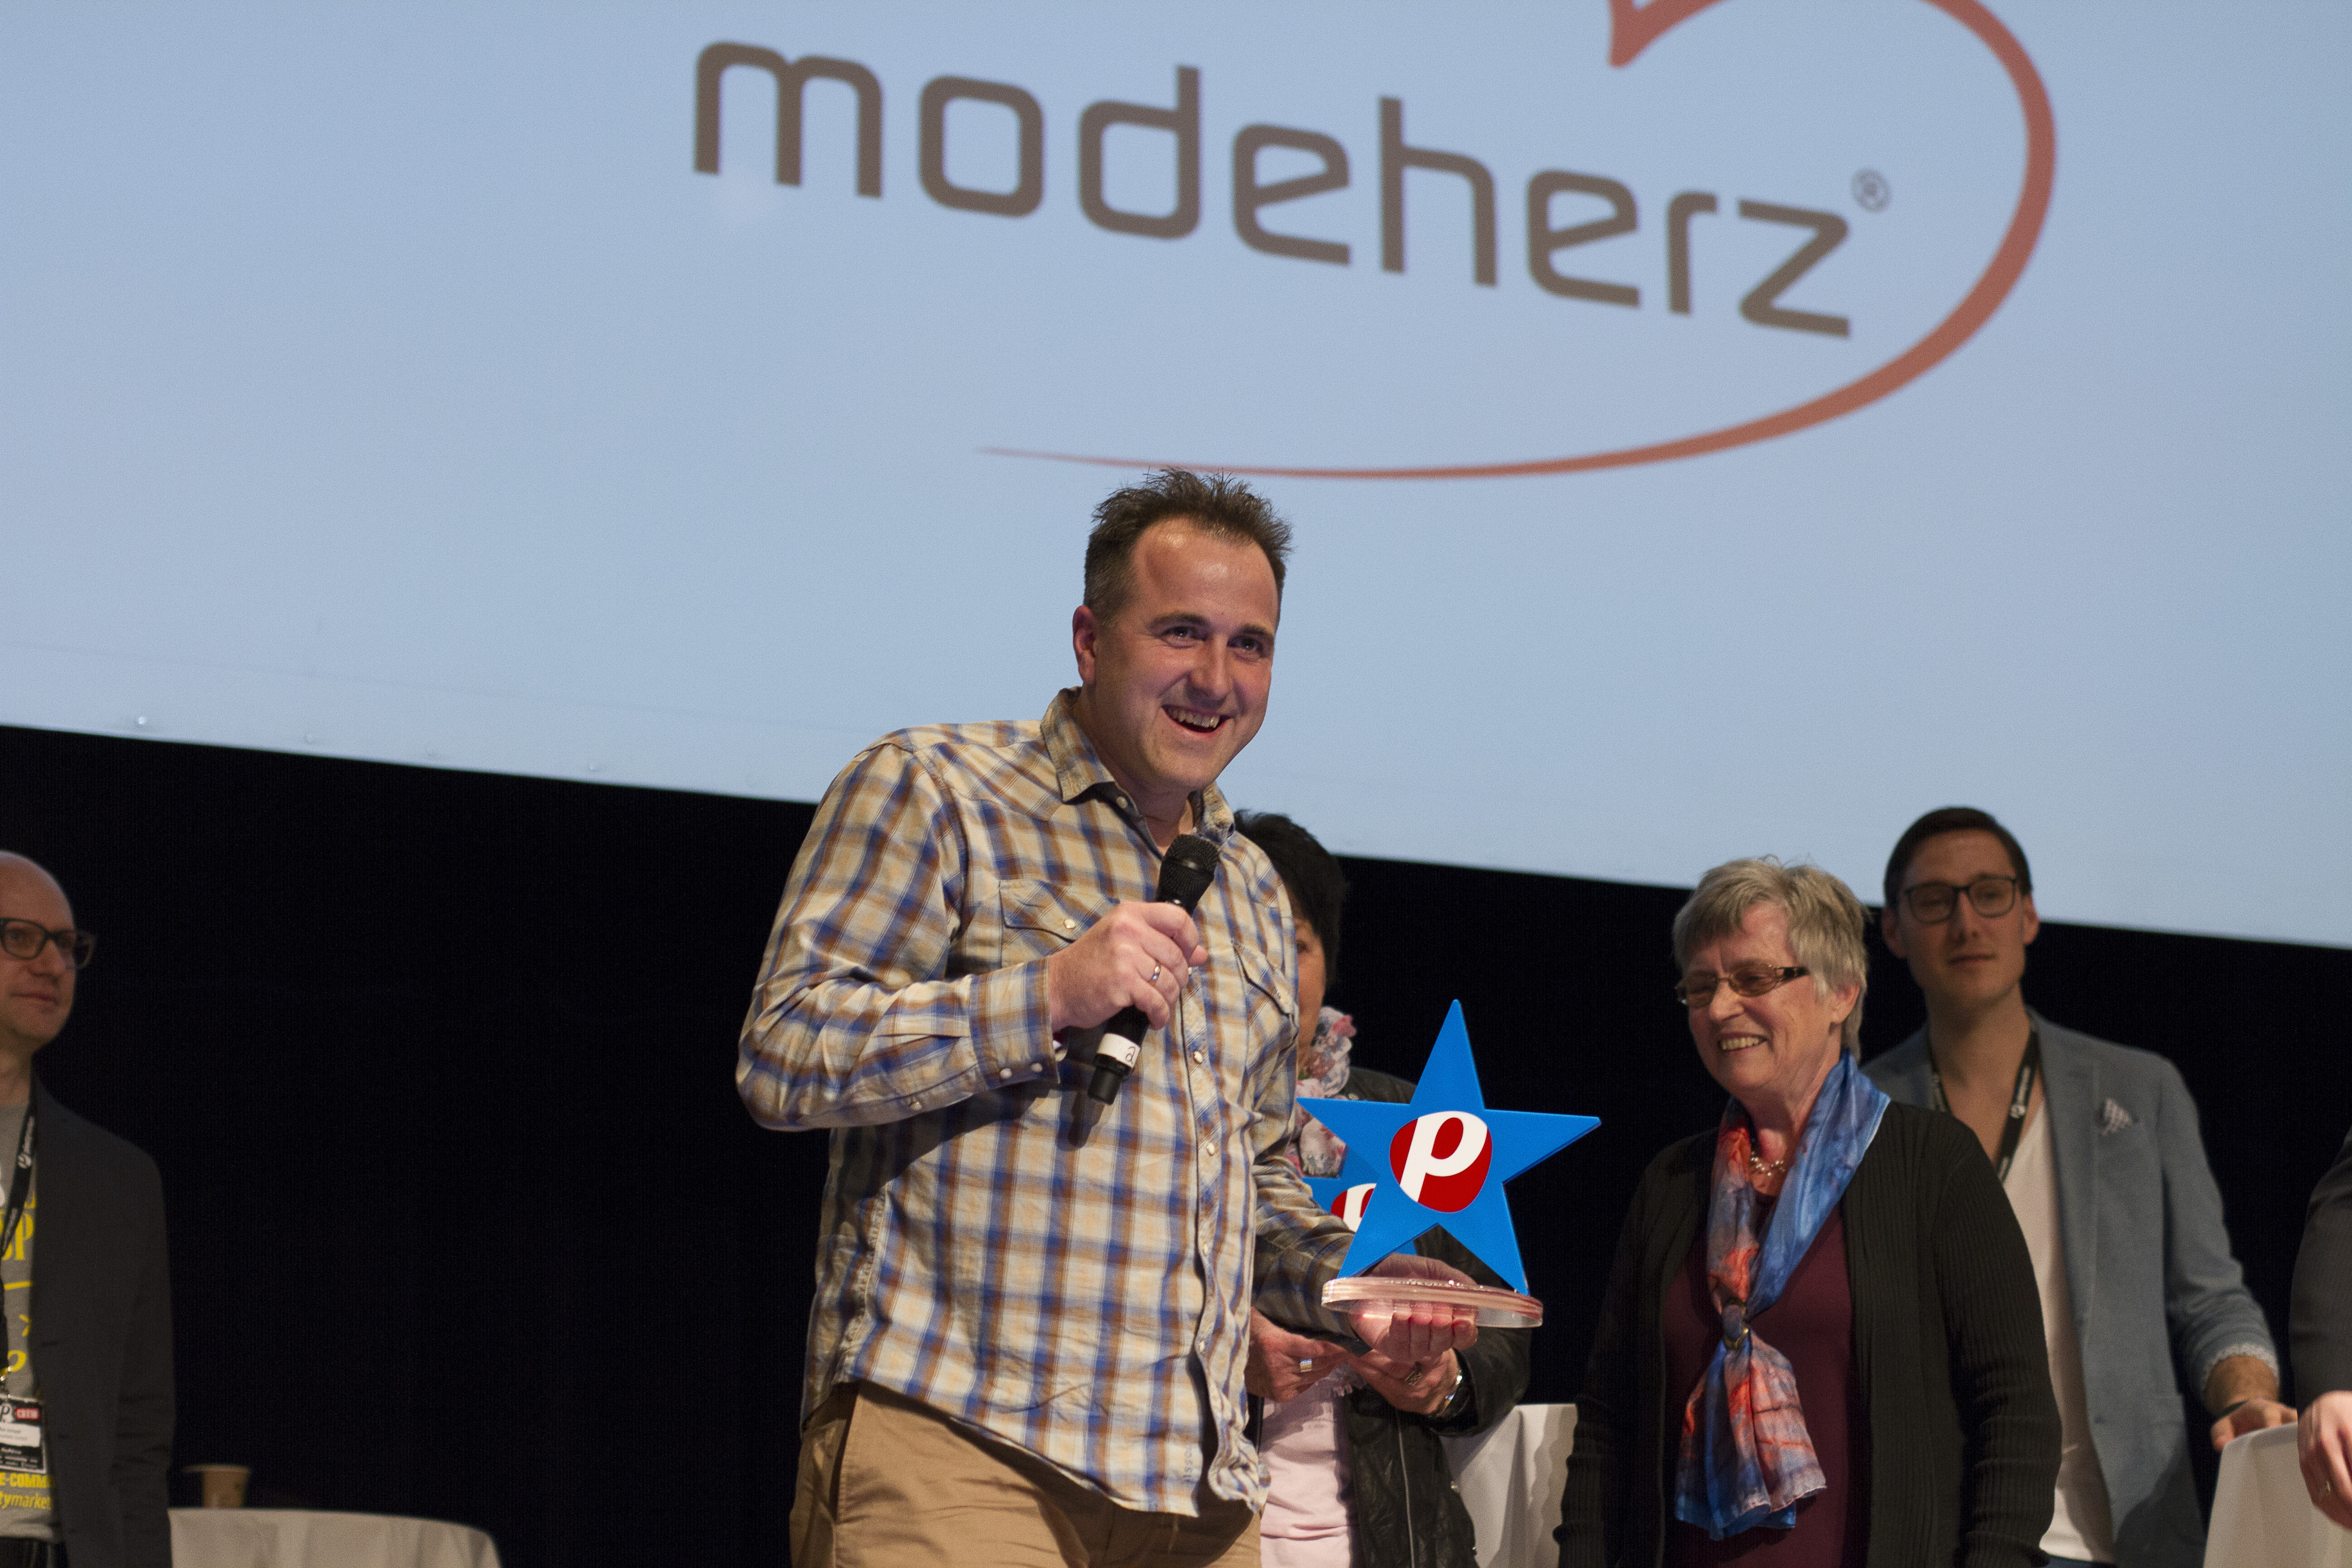 plenty award winner 2016 modeherz